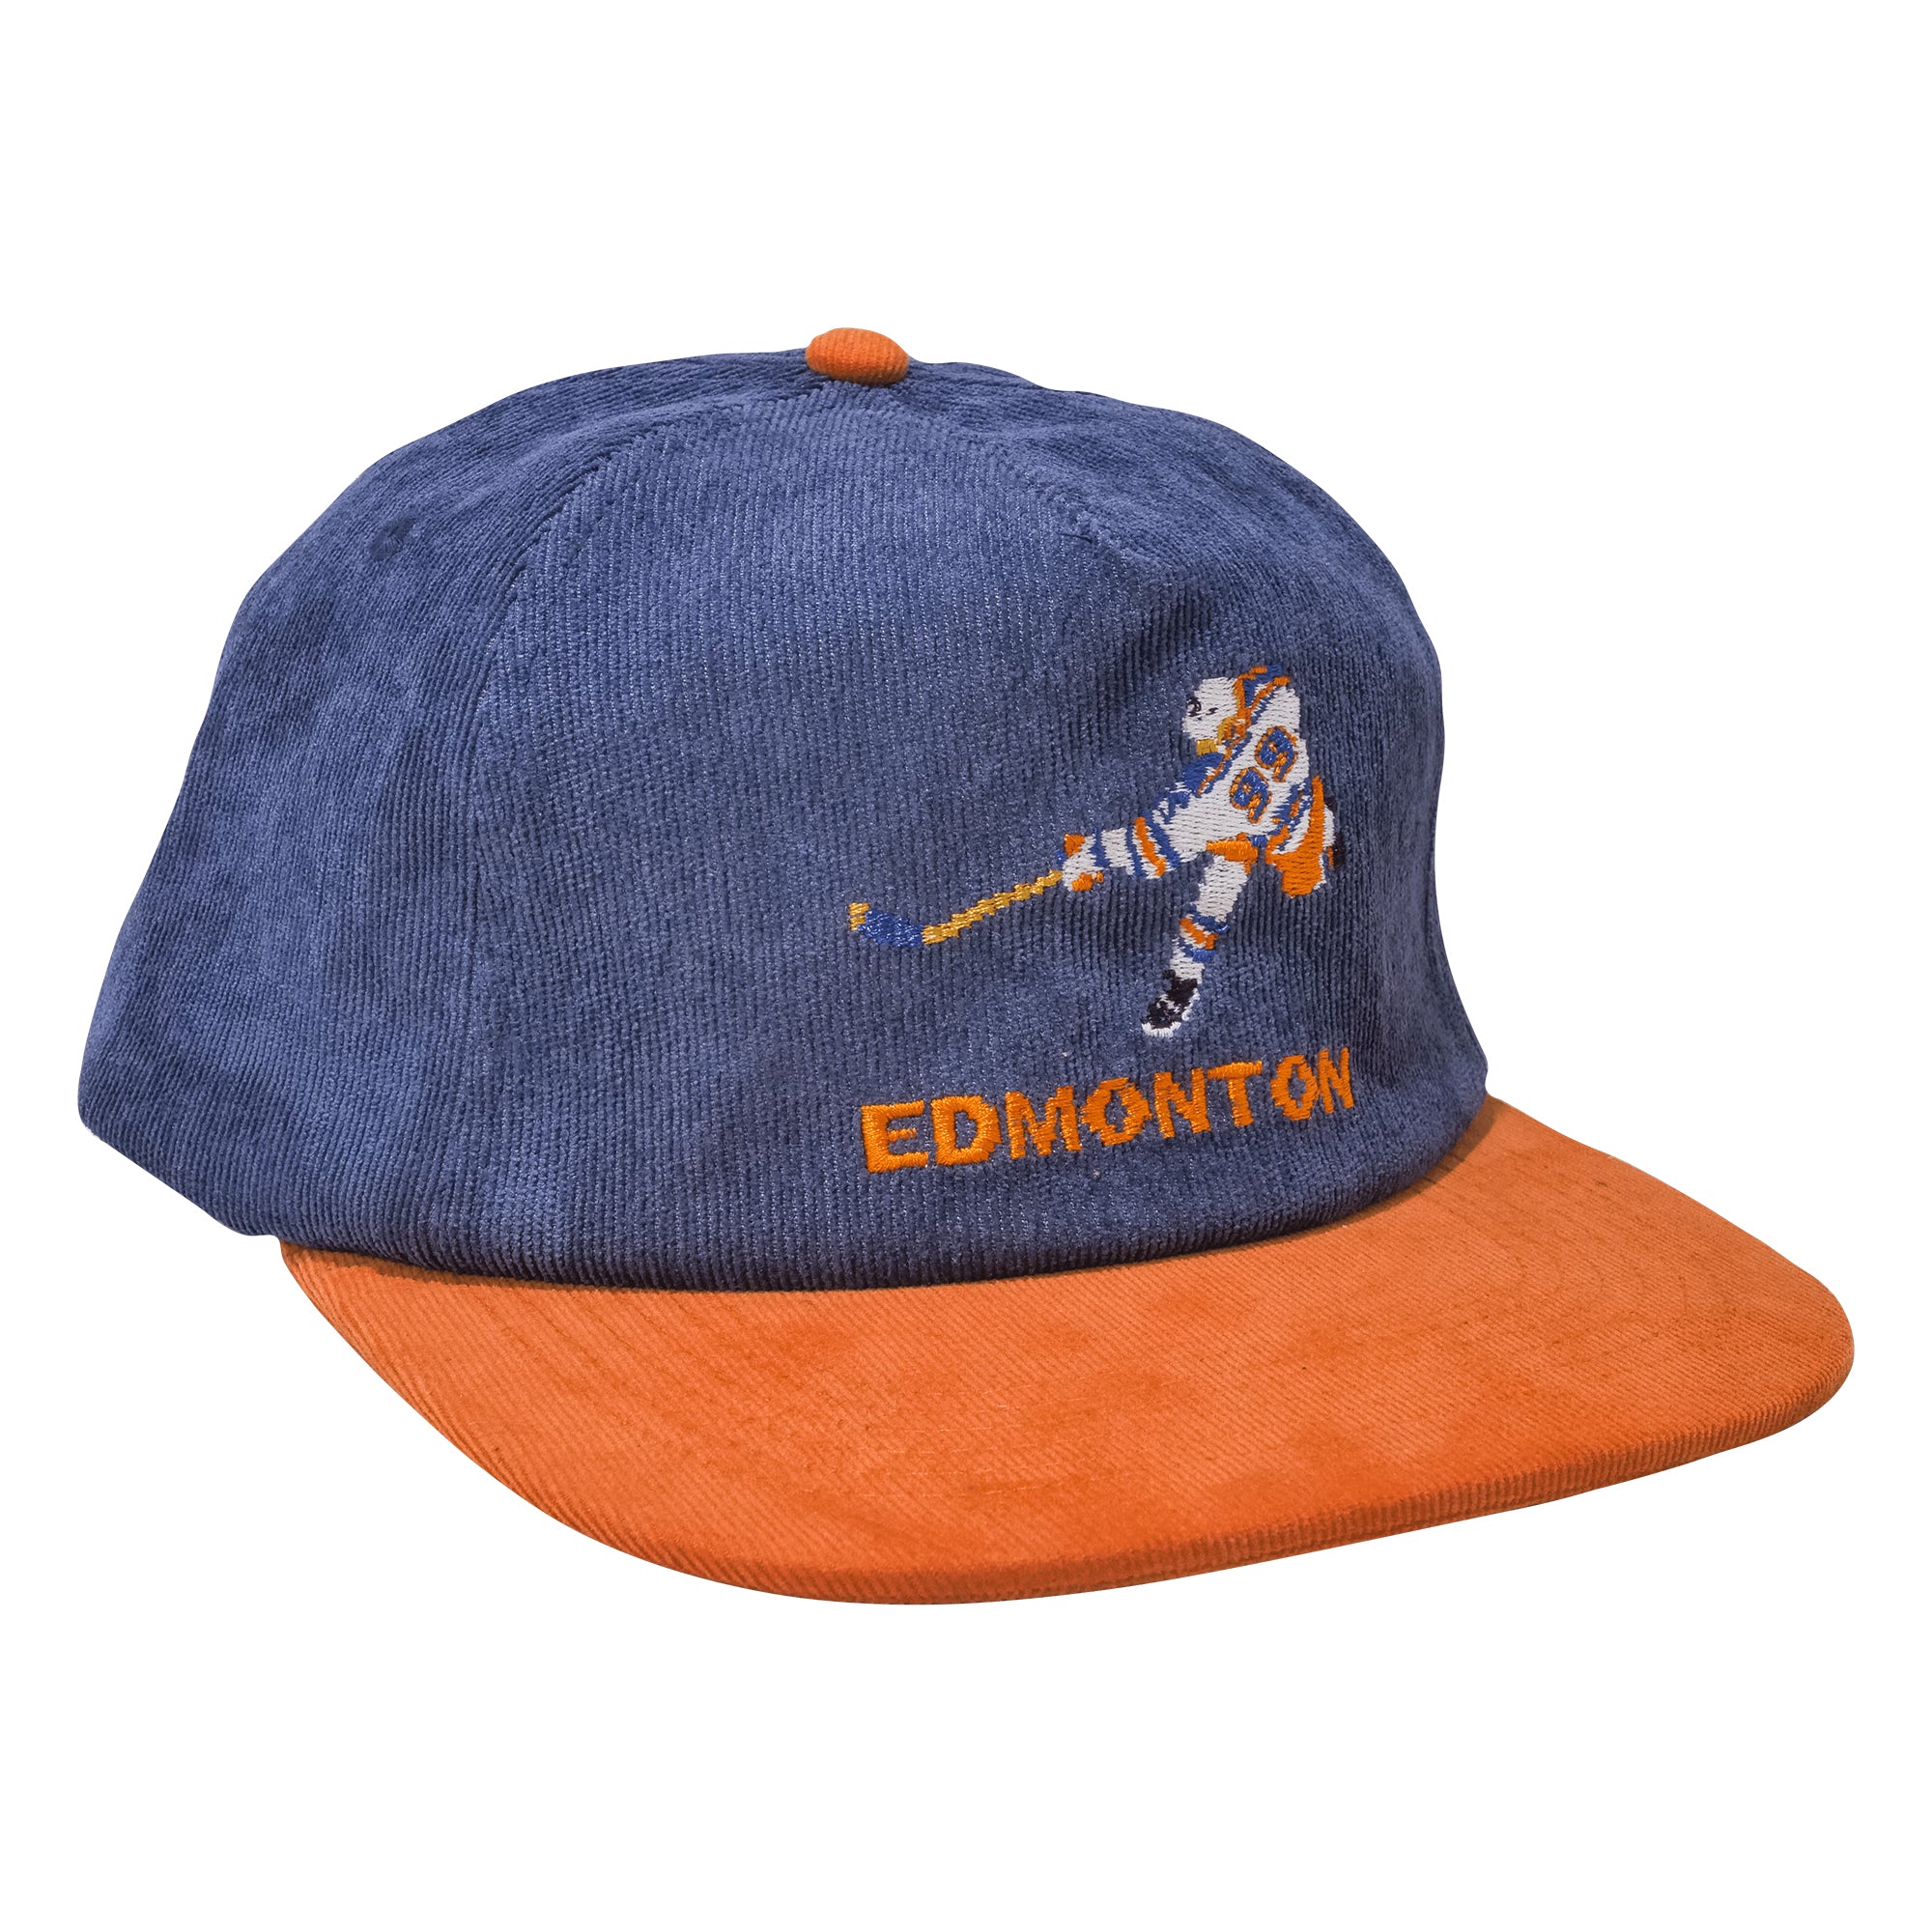 Tecmo Gretzky Retro 8bit 90s Hockey Blue Orange Corduroy Hat. B Fresh Gear.